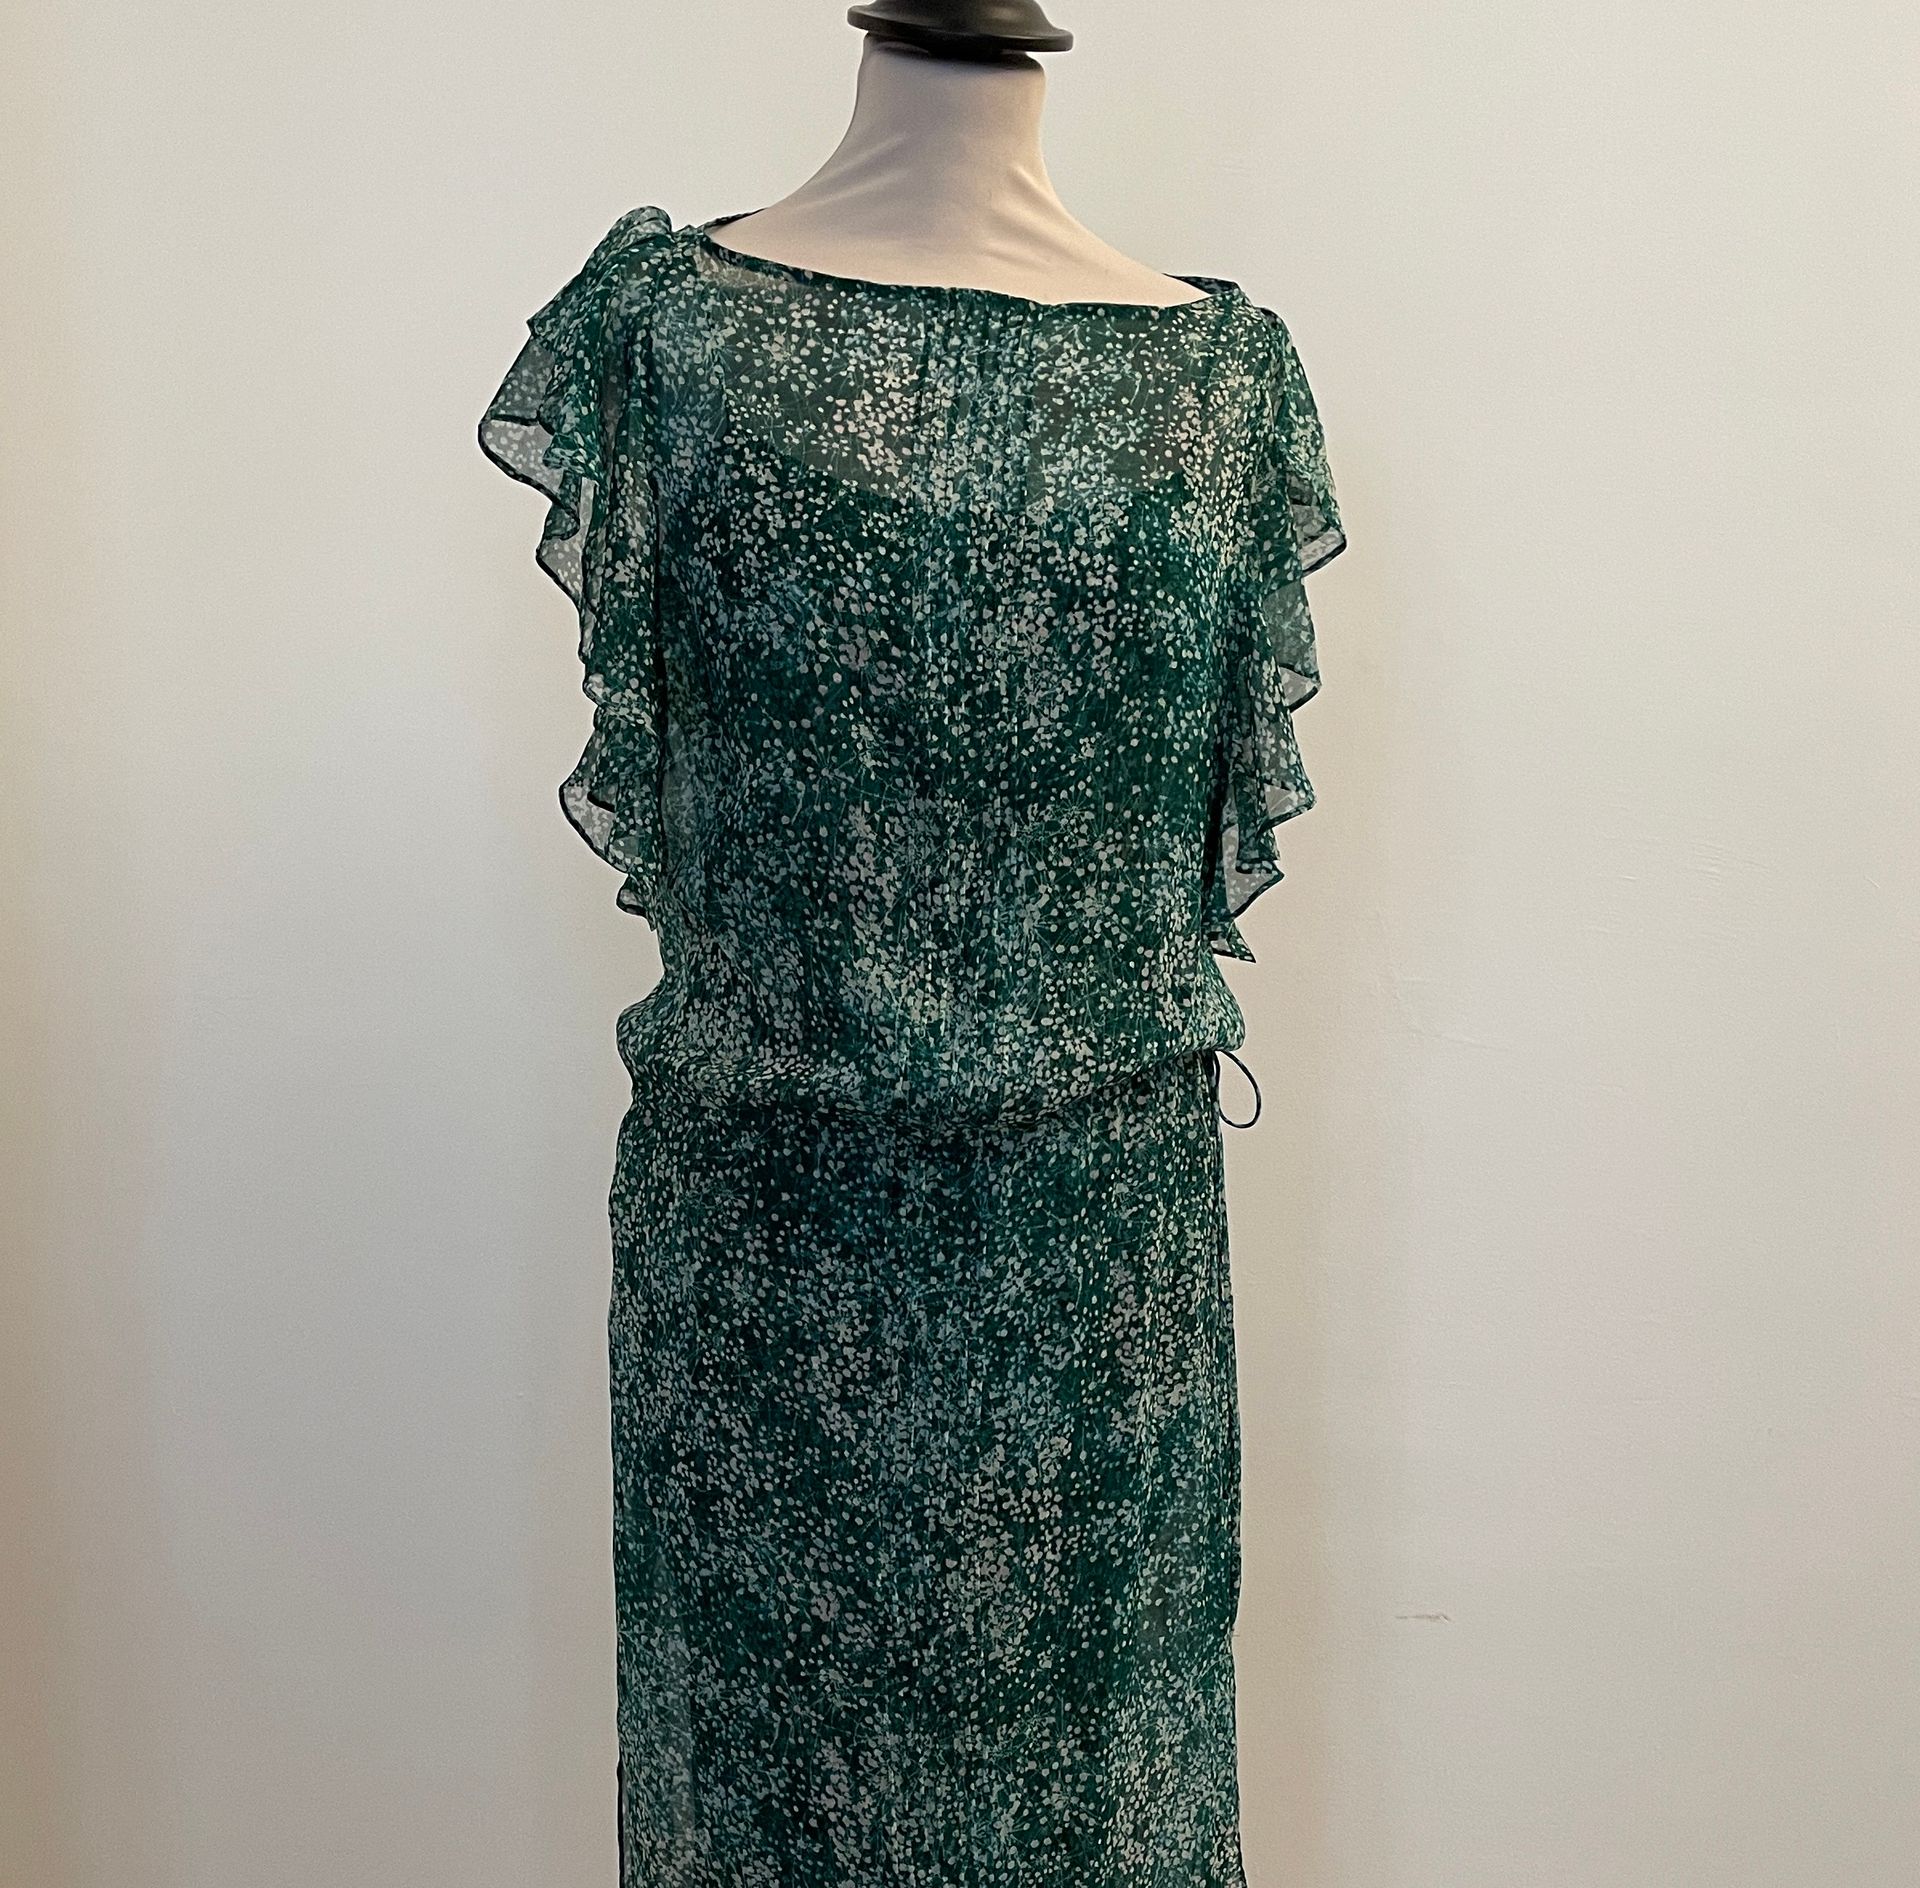 Null DIANE VON FURSTERBERG

绿色背景上有风格化图案的丝绸礼服。

尺寸约为36

磨损，小线拉断。